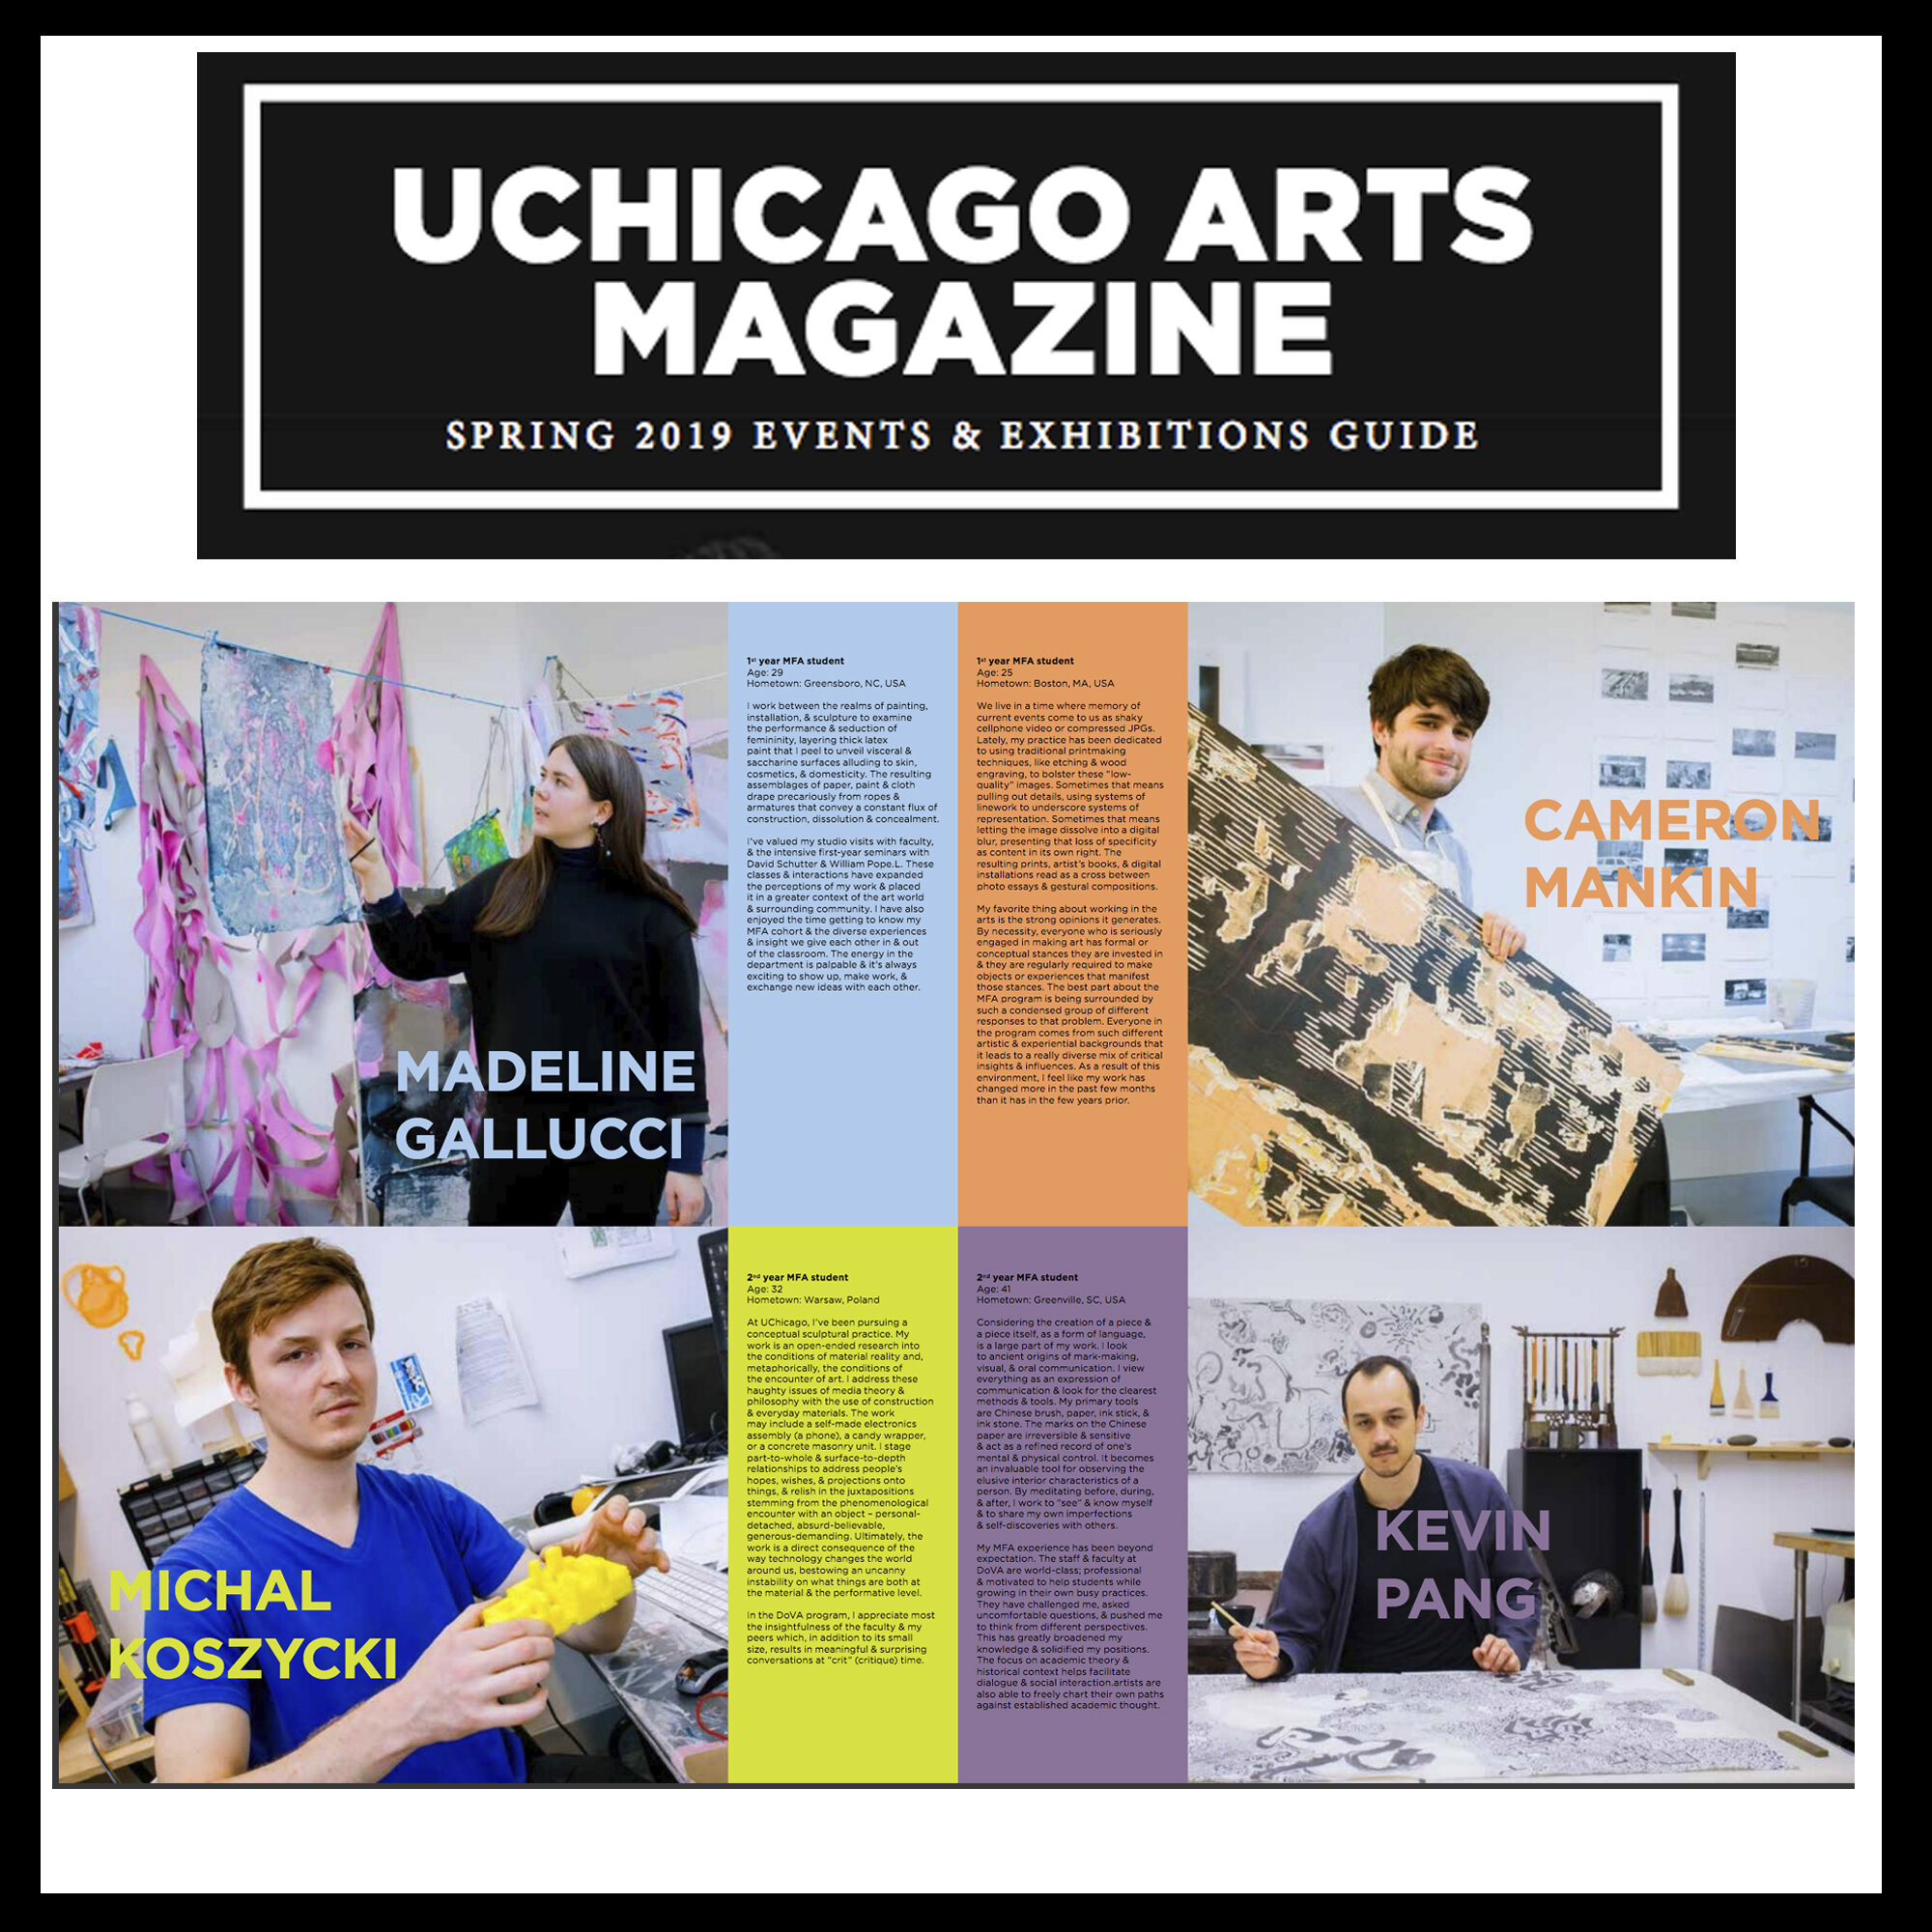 UChicago Arts Magazine, Spring 2019